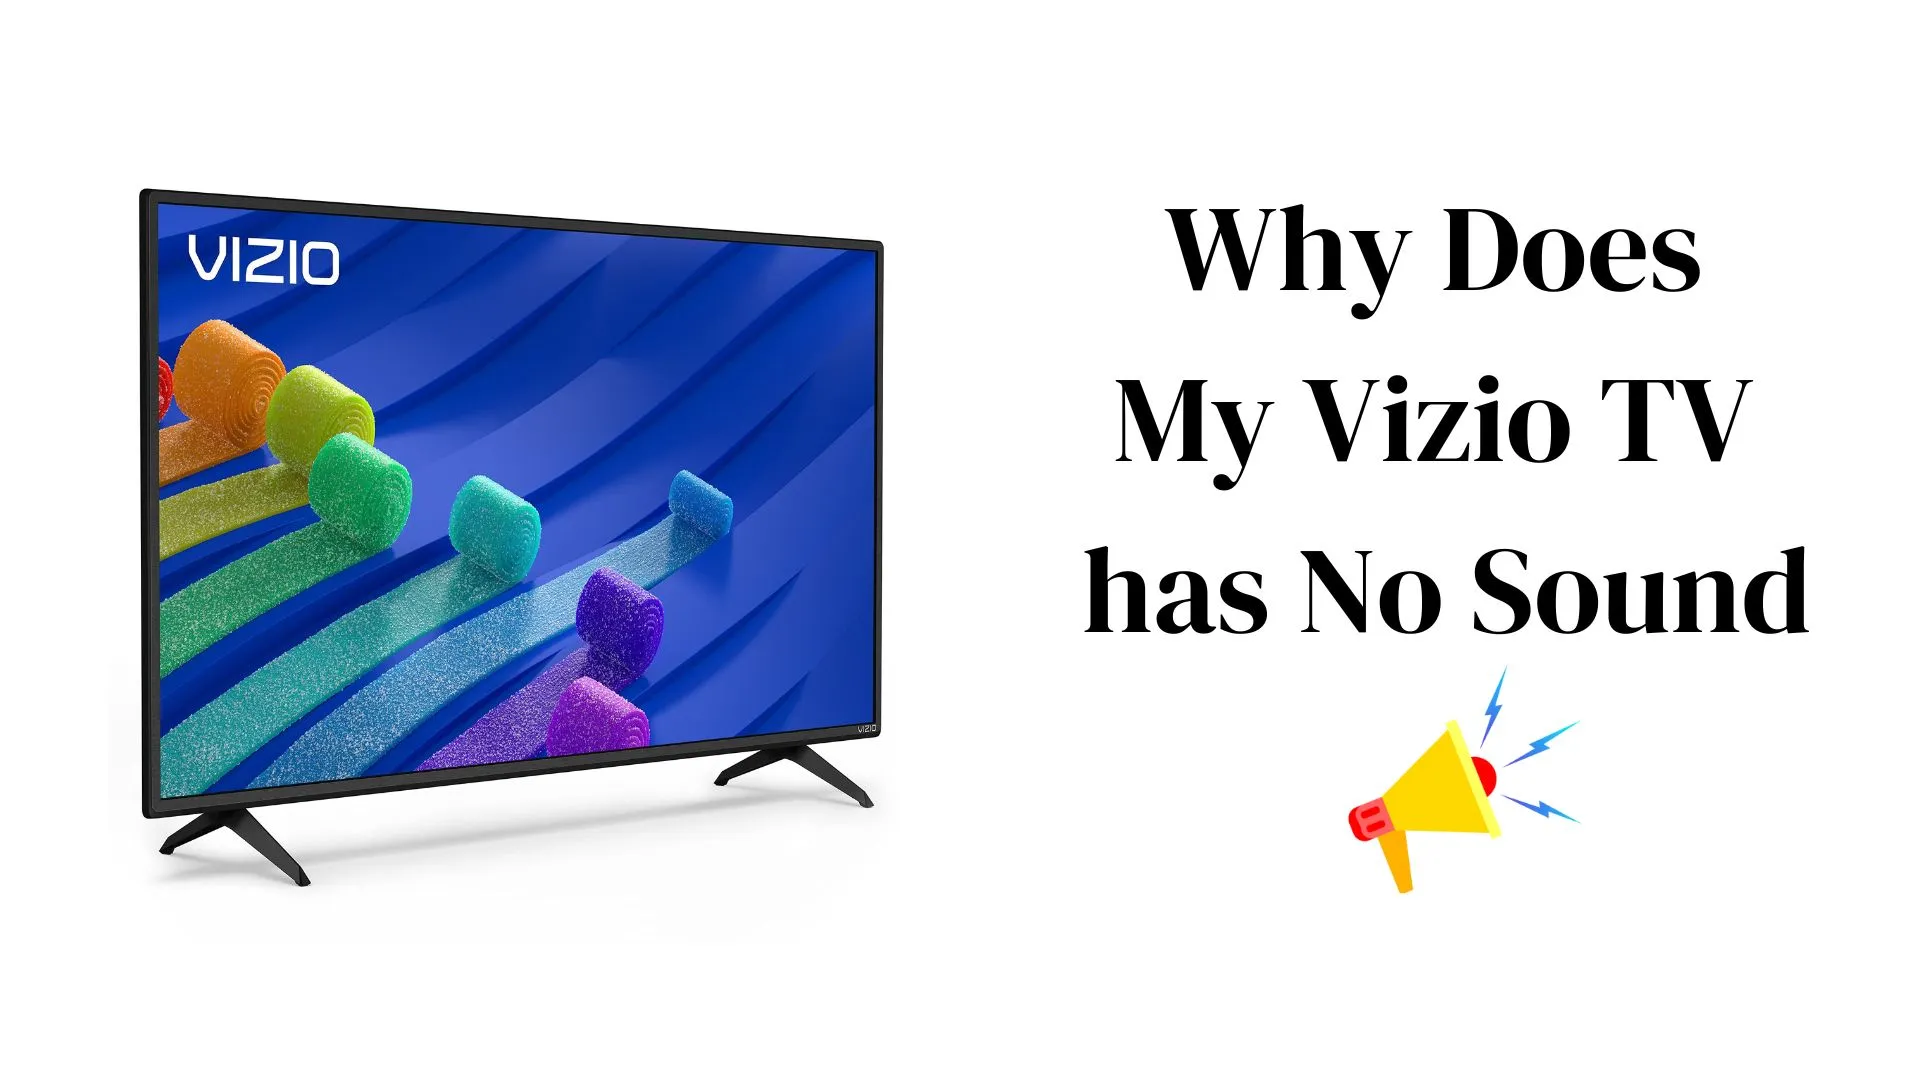 Why Does My Vizio TV Have No Sound